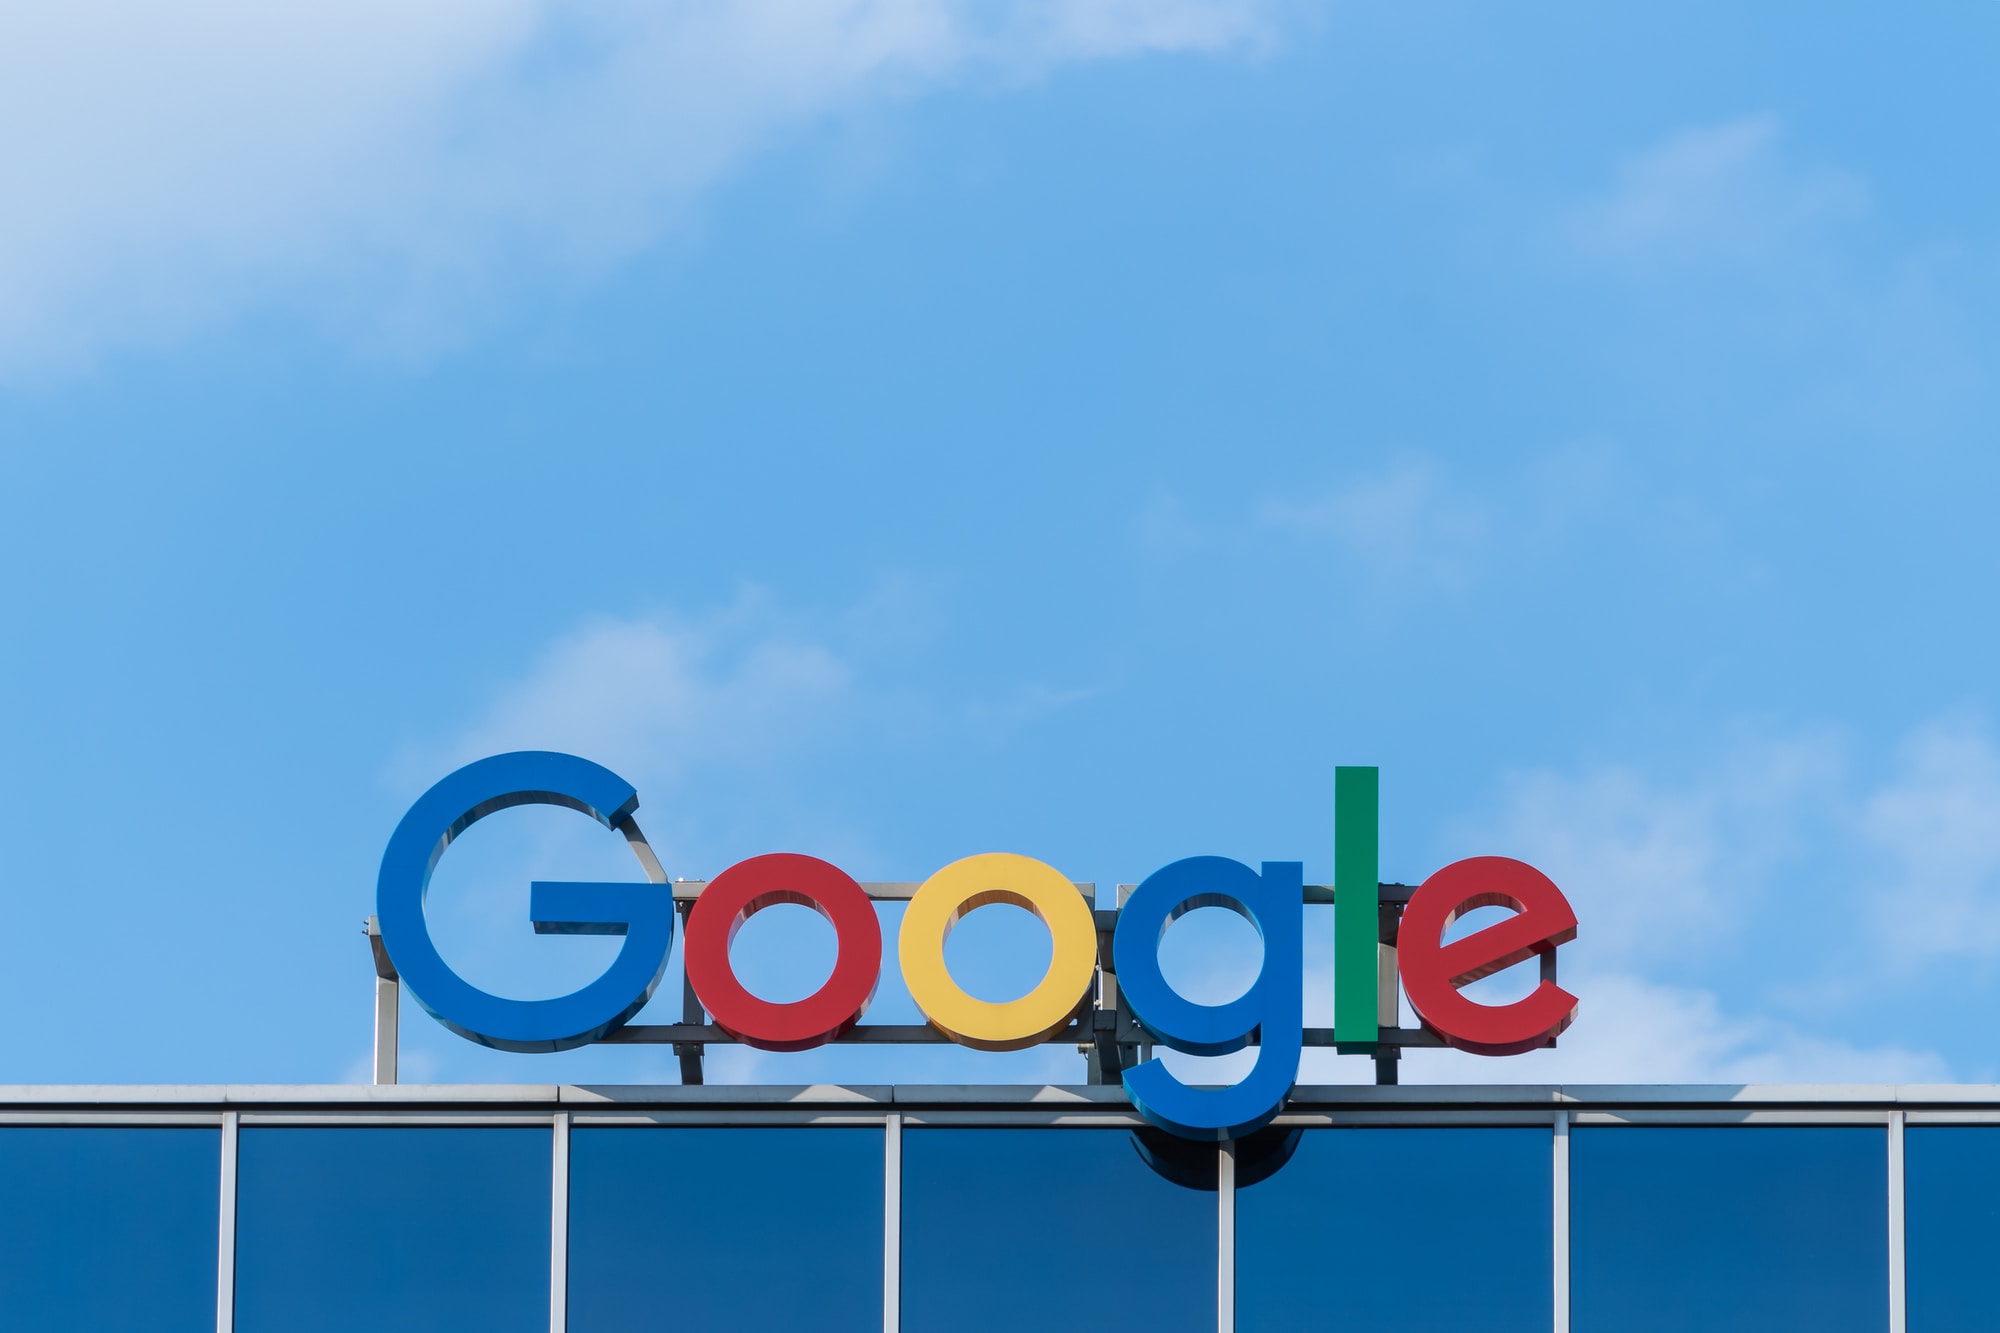 Google HQ logo